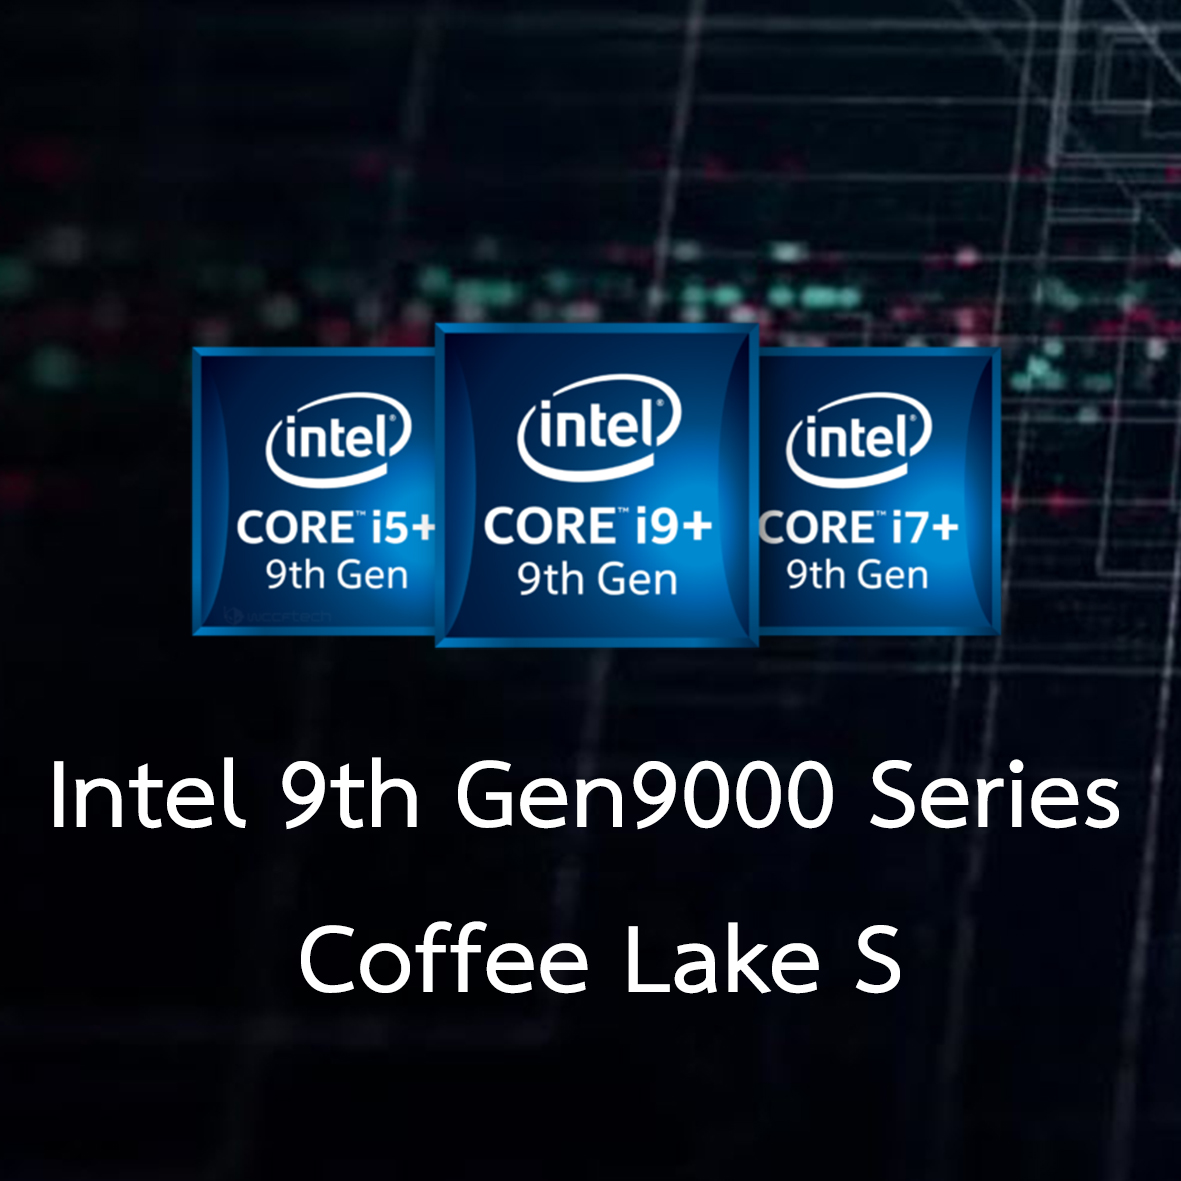 intel 9th gen 9000 series coffee lake s มาแน่!! อินเทลเผยรุ่นซีพียู 9th Gen ในรุ่น 9000 Series ในรหัส Coffee Lake S ทั้งหมดจำนวน 7รุ่น 